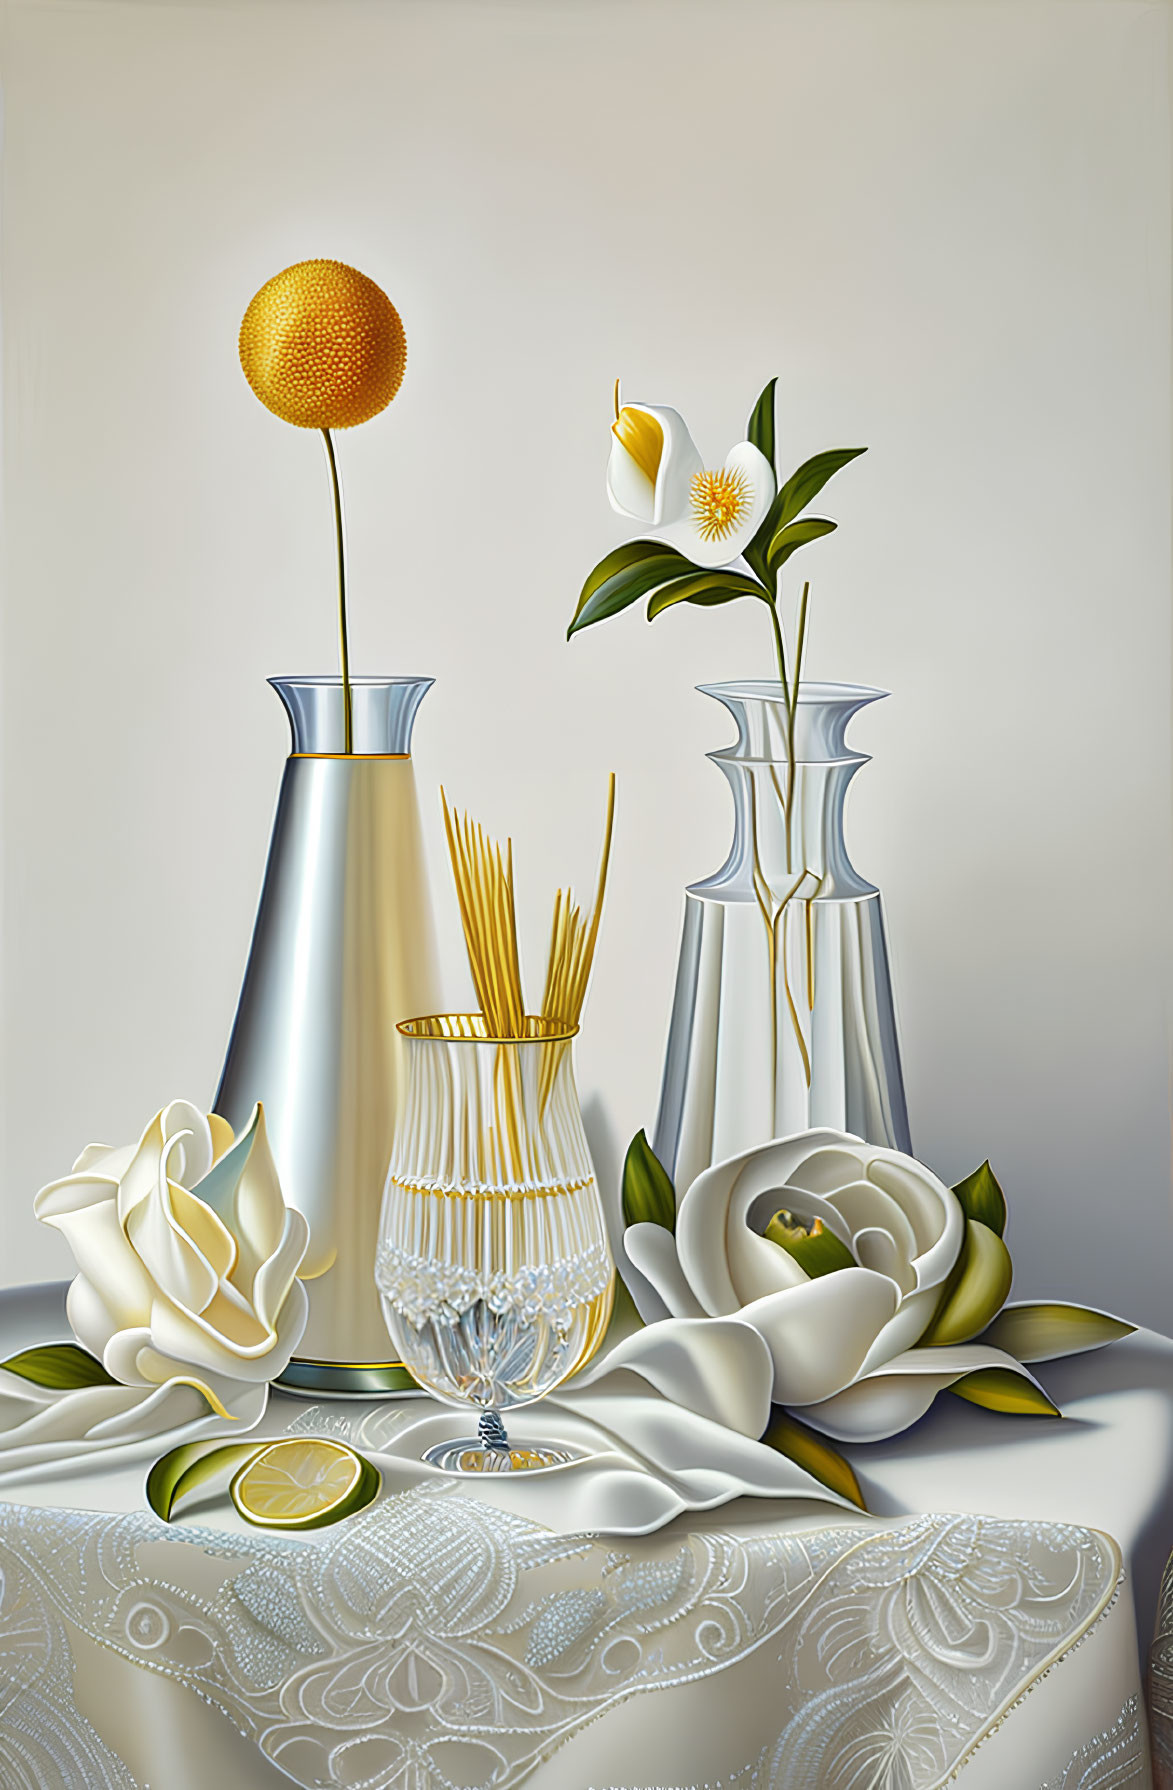 Textured orange, calla lilies, white rose, vases on draped cloth.